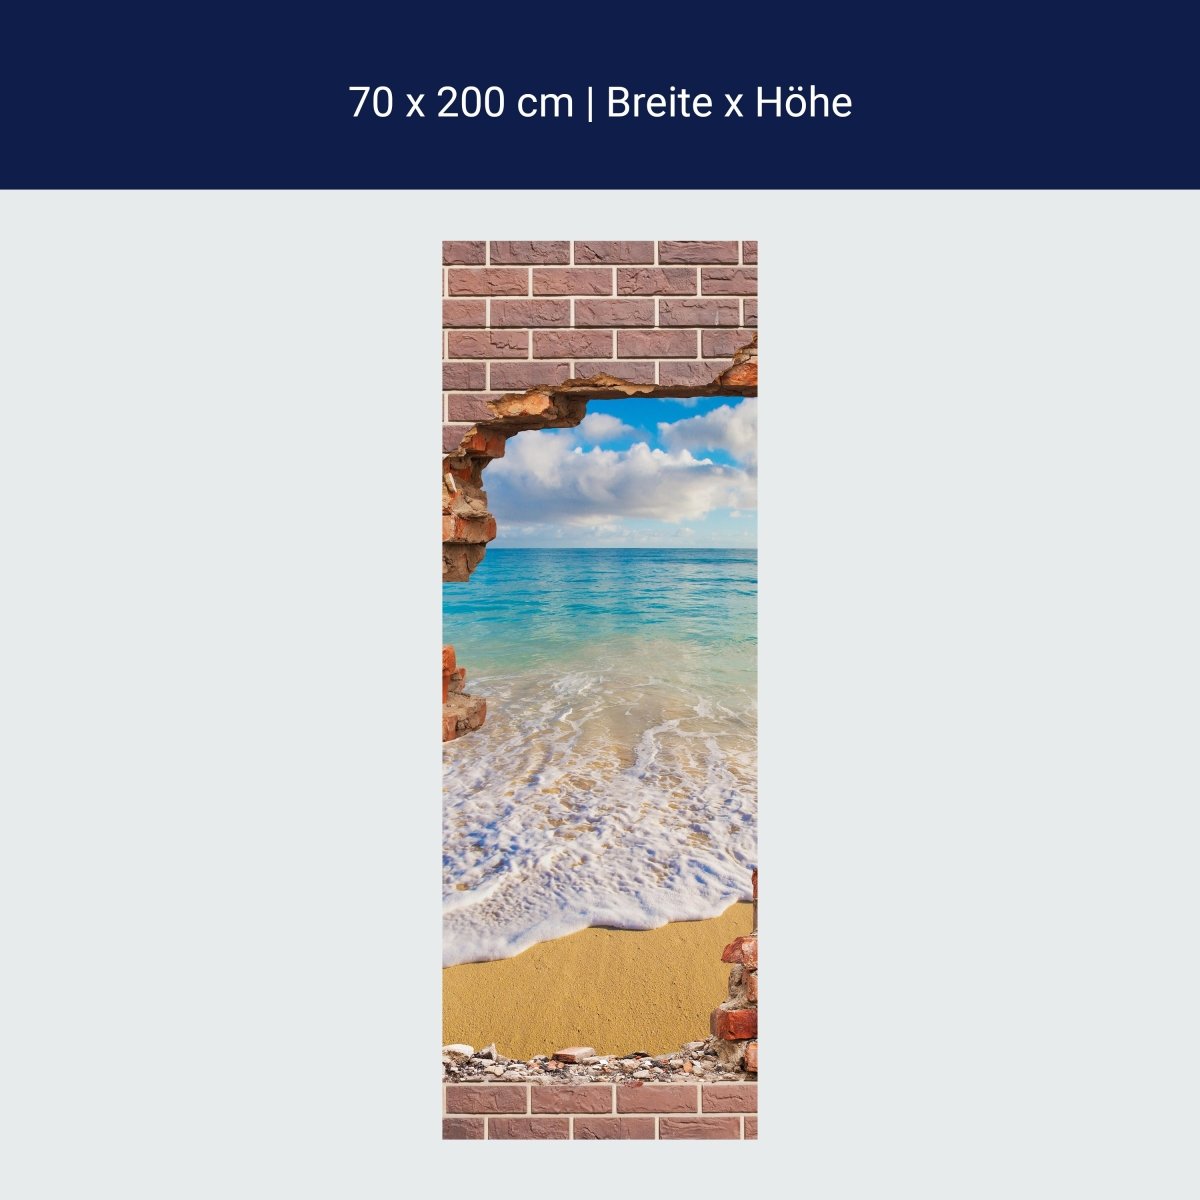 Door wallpaper 3D brick beach sea vacation M1273